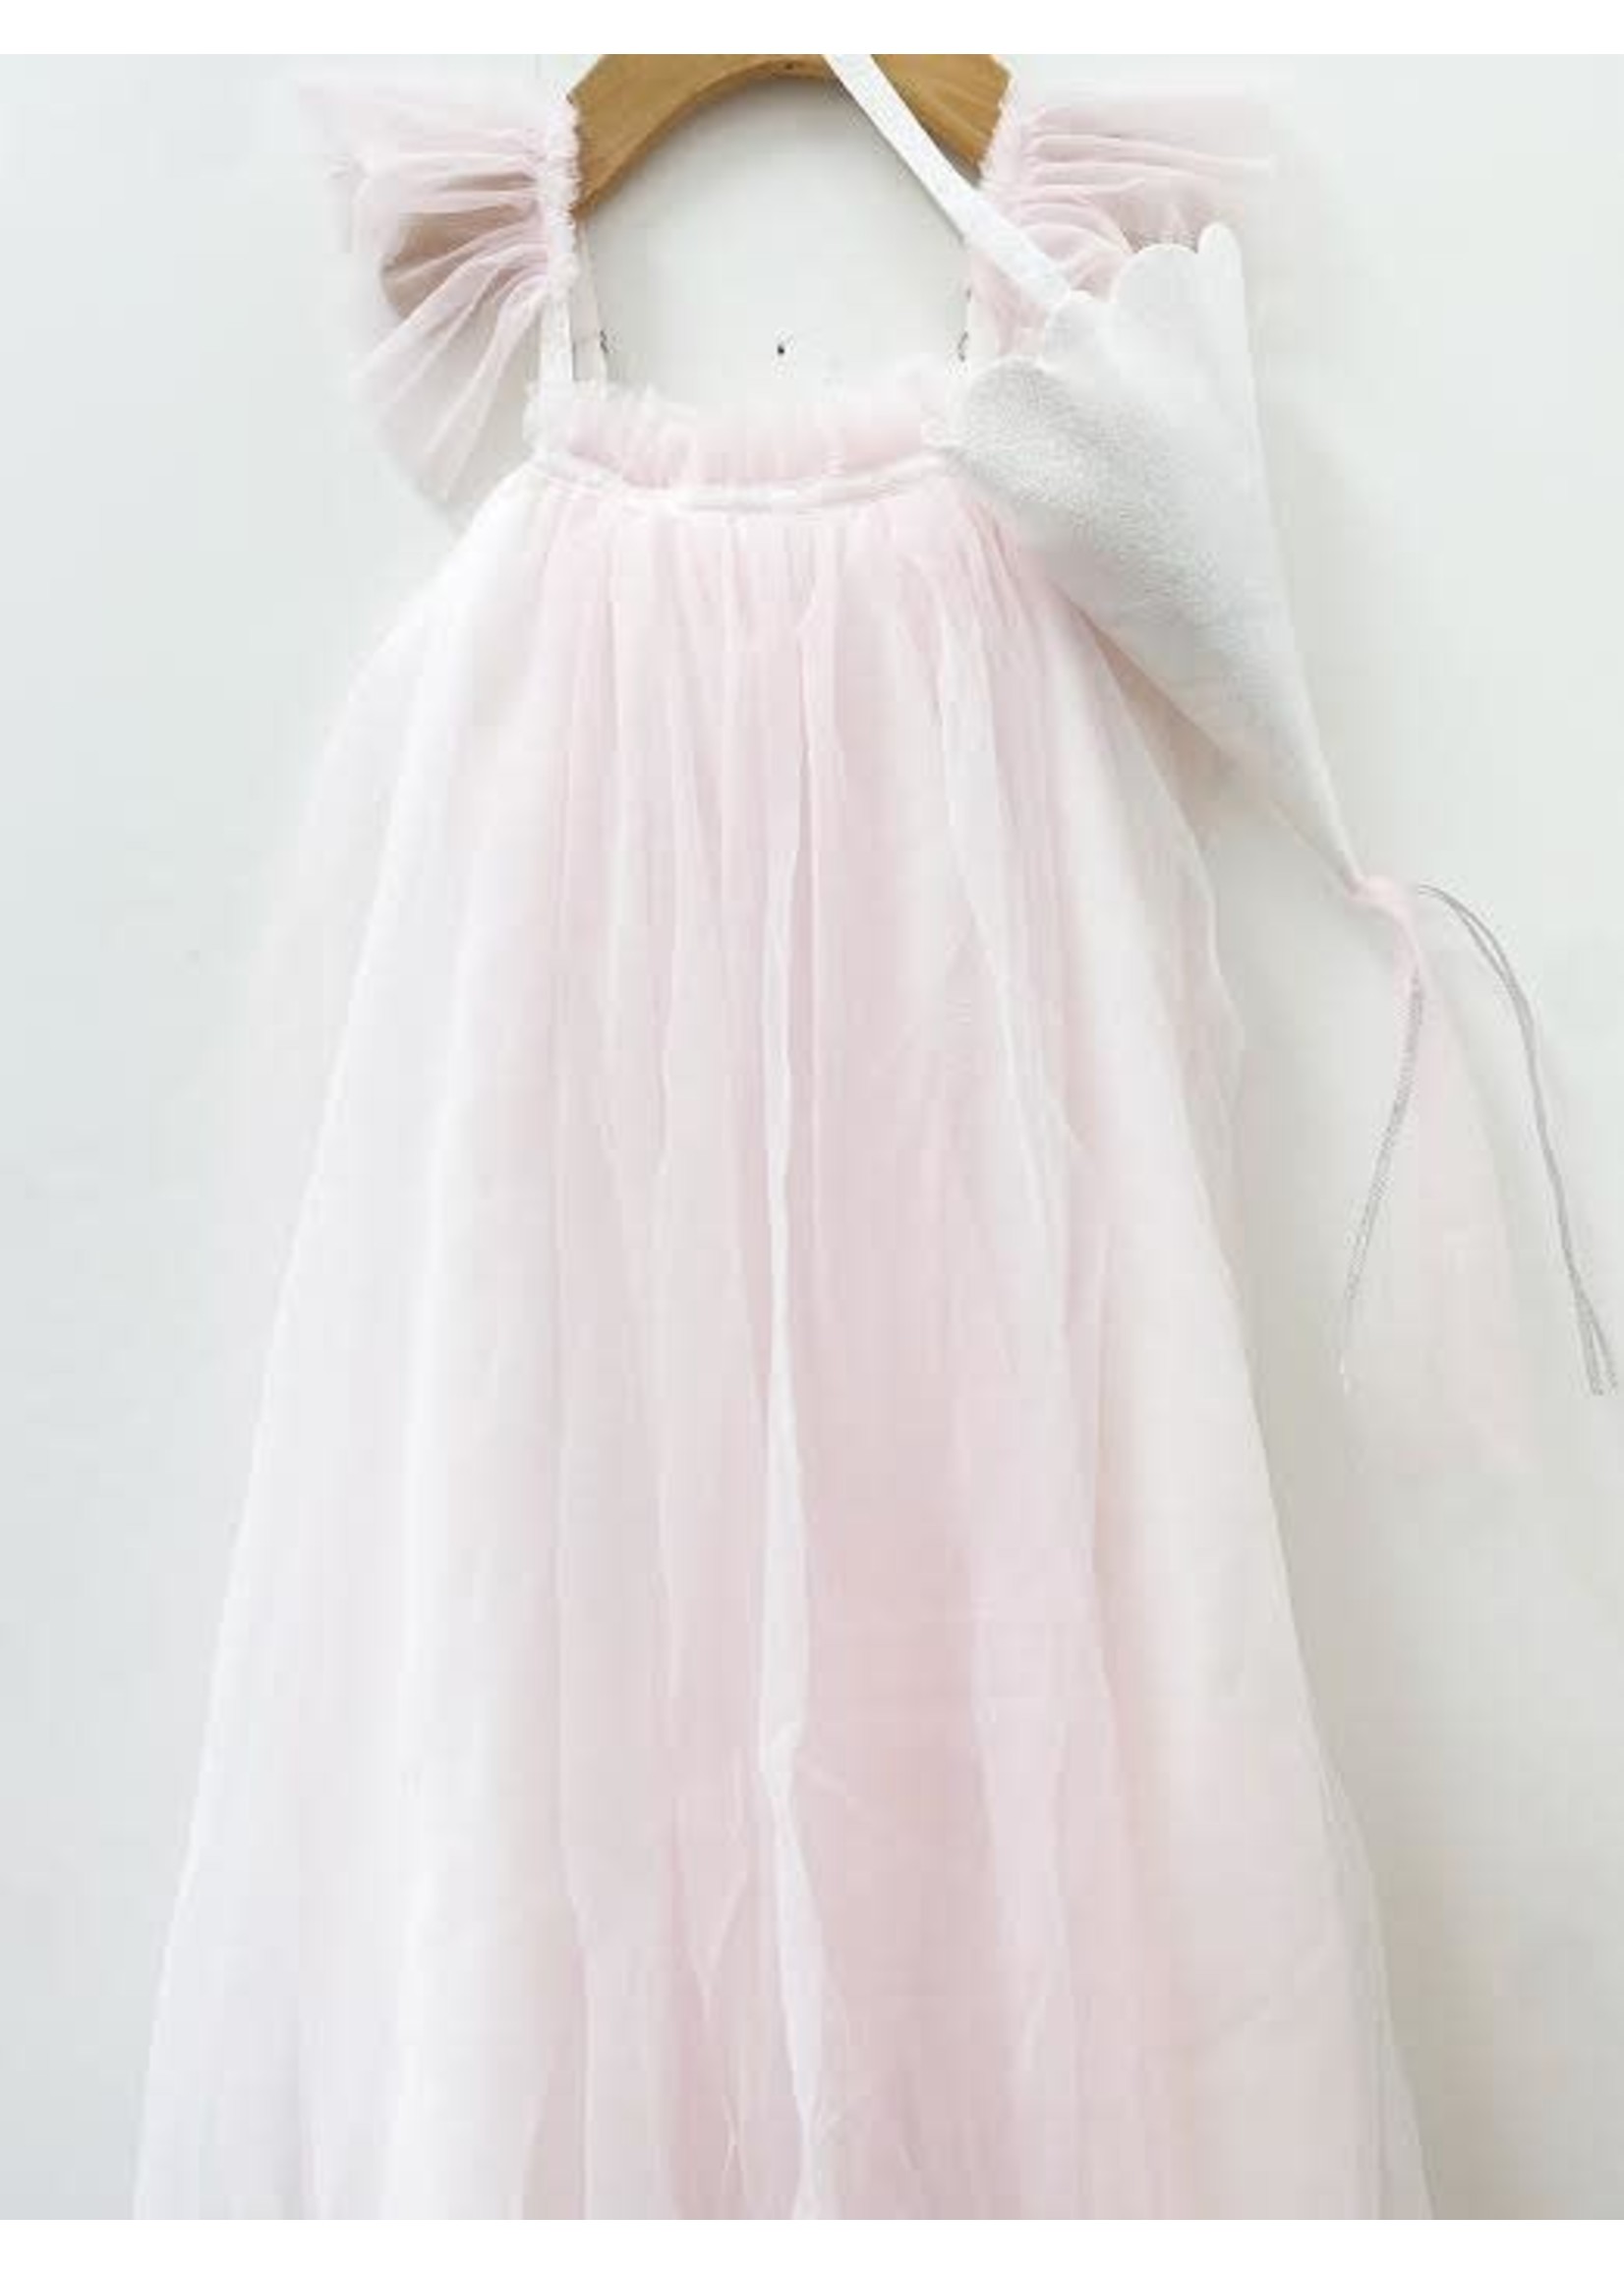 Meri Meri Magical Princess Dress (up to size 5/6 years)